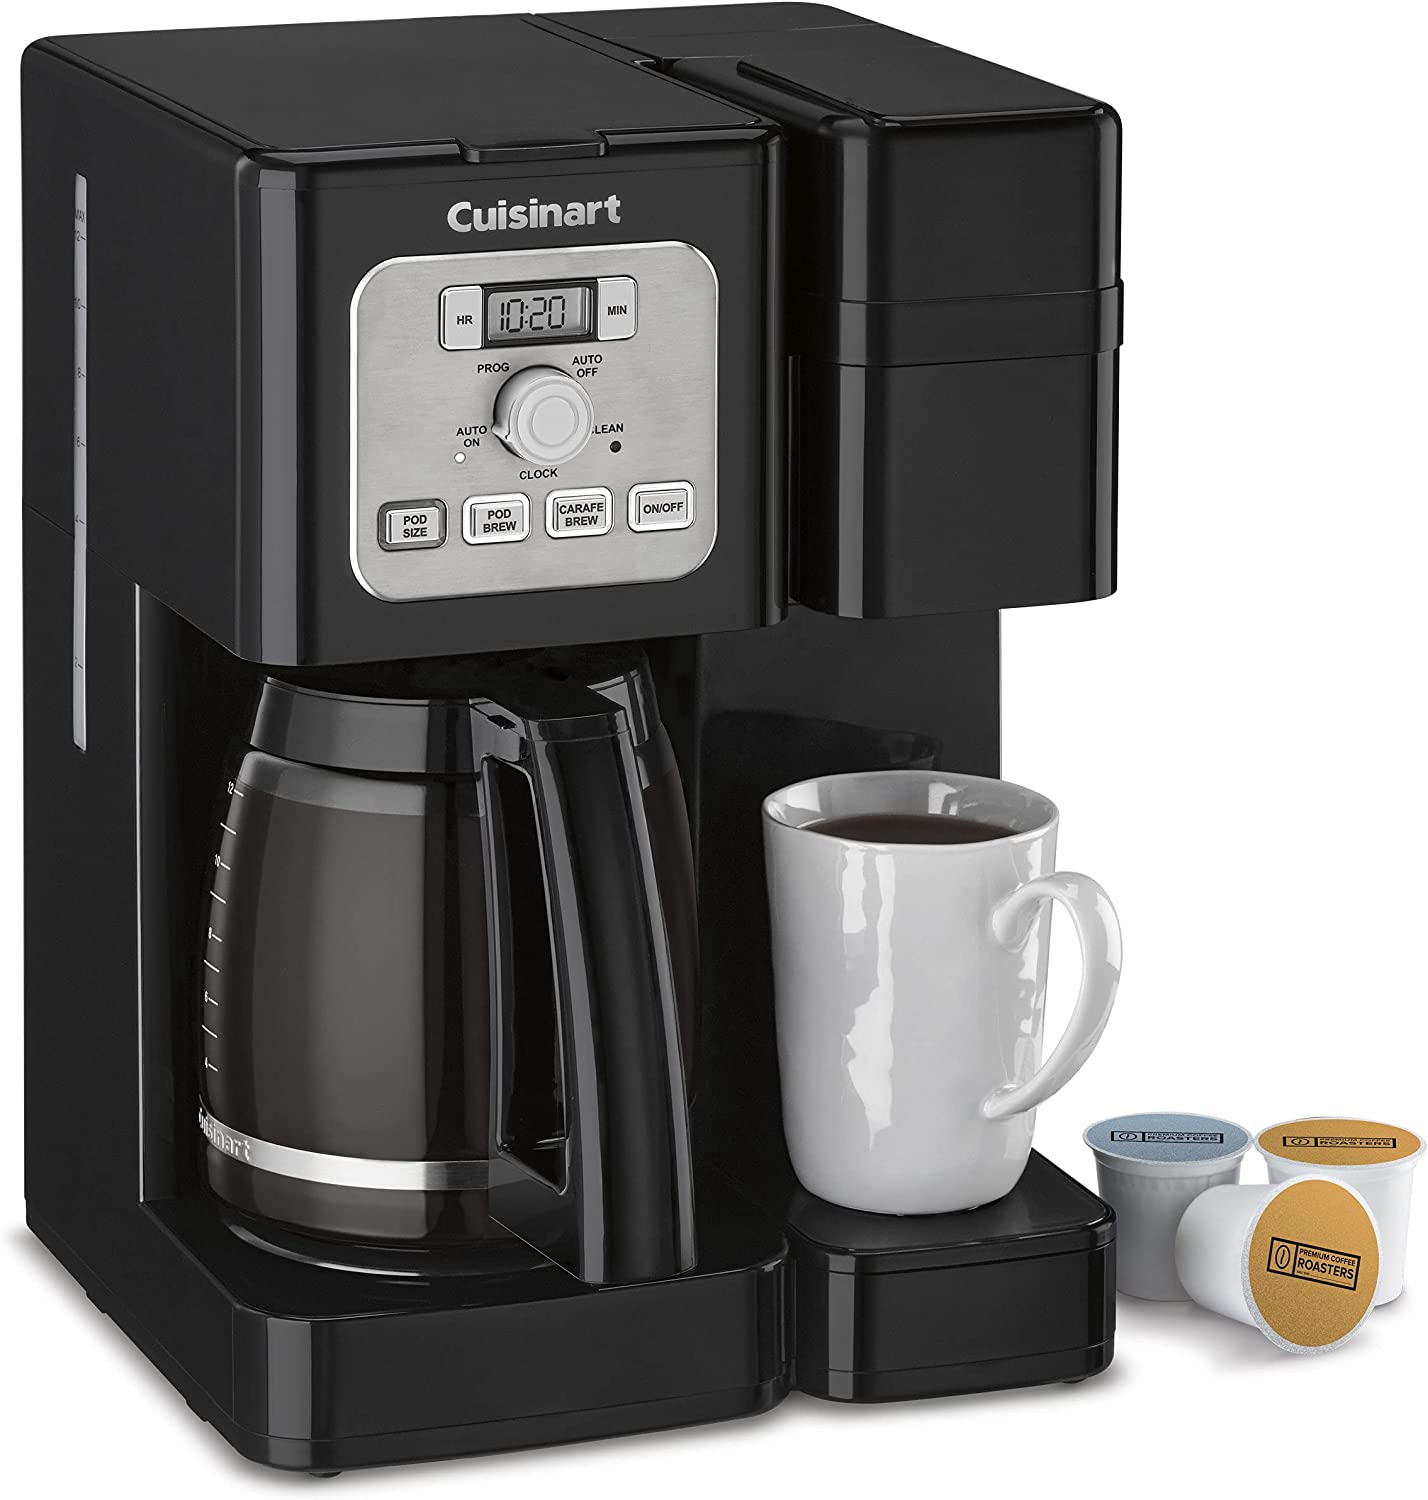 Cuisinart SS-12FR 12 Cup Center Brew Basics Coffeemaker Black - Certified Refurbished